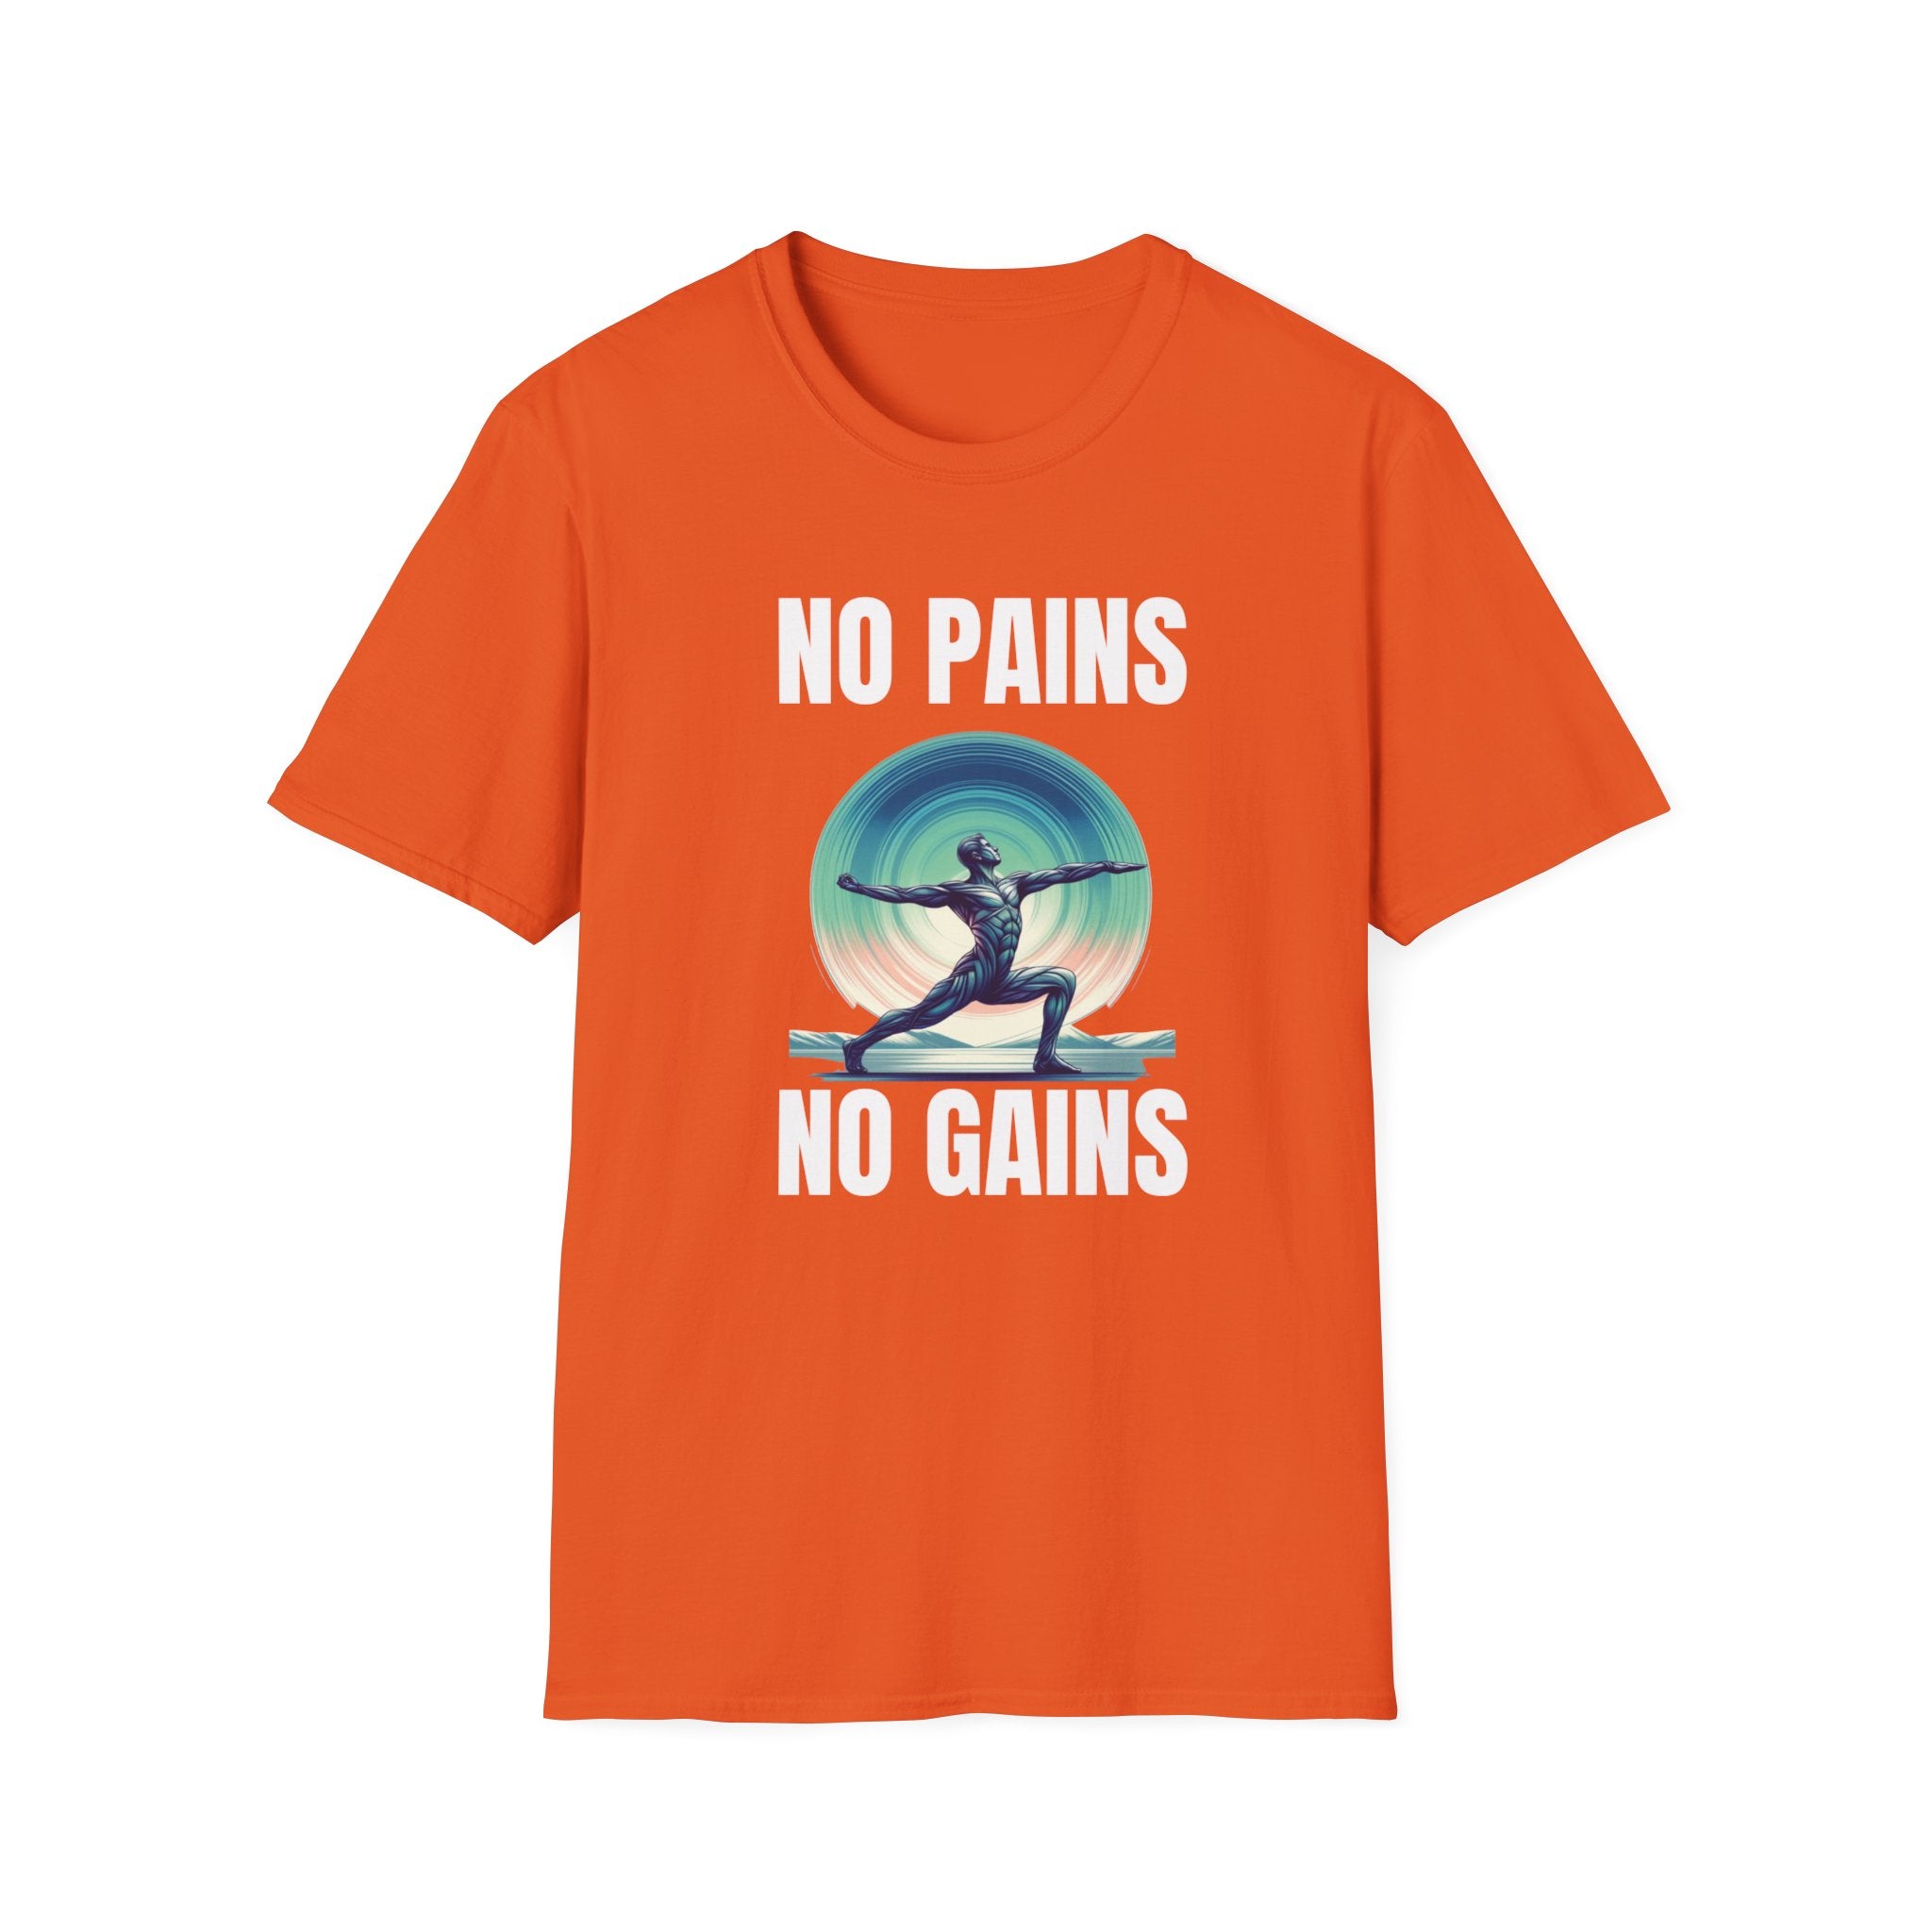 No Pains No Gains Unisex Softstyle Motivational Inspirational Crew Neck T-Shirt, For Teachers, Principal, Counselors